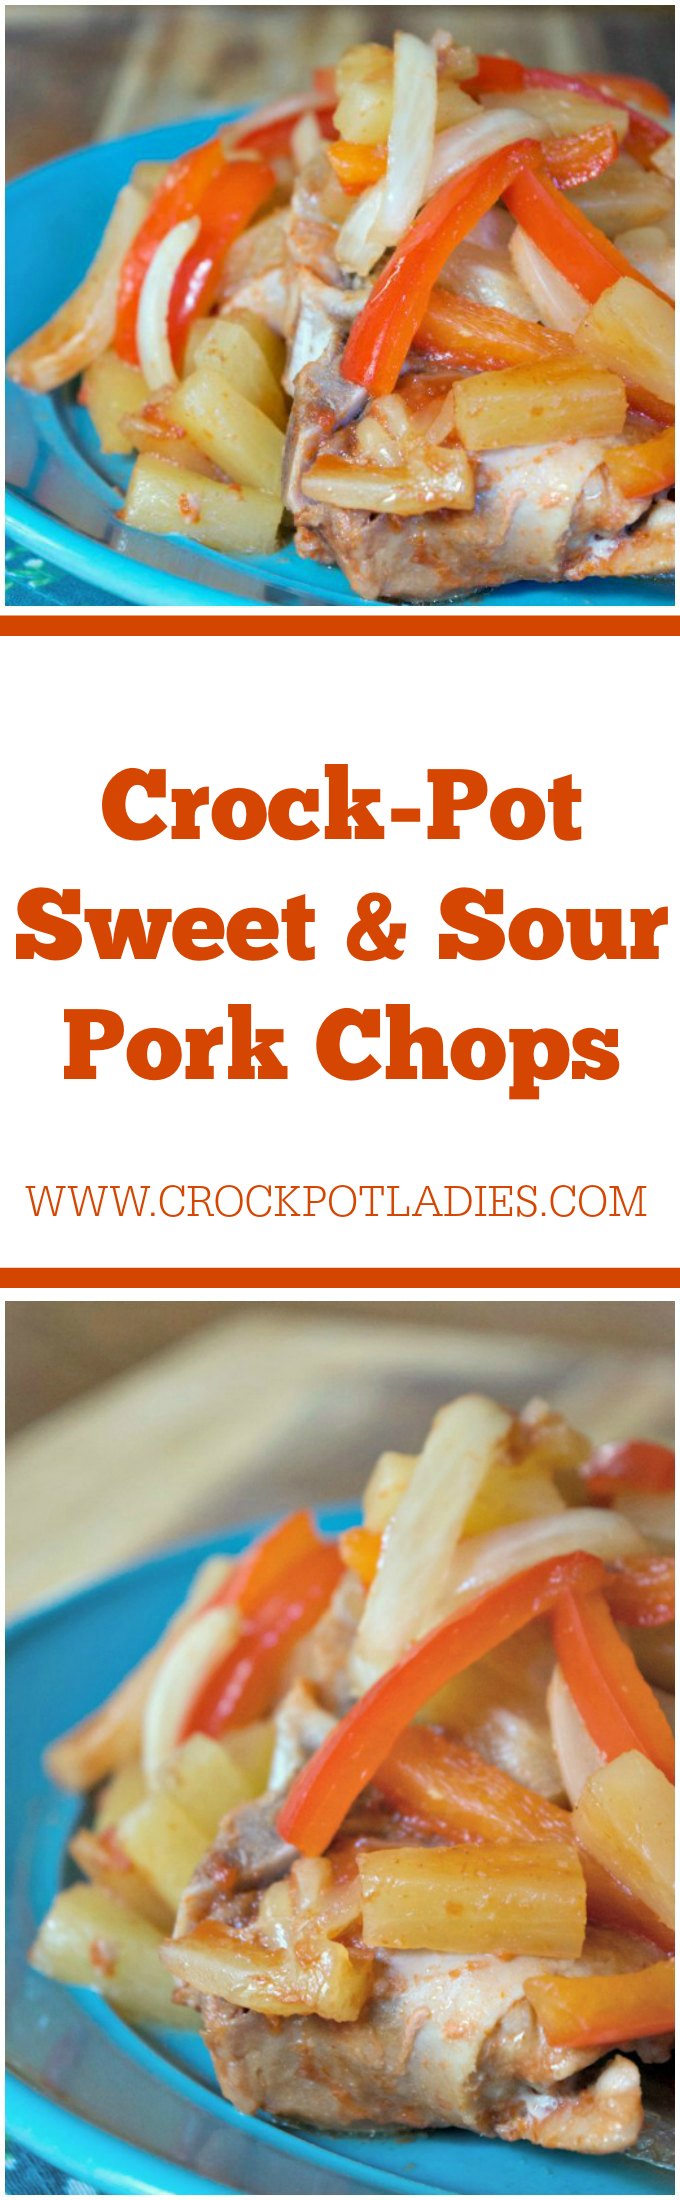 Crock-Pot Sweet & Sour Pork Chops